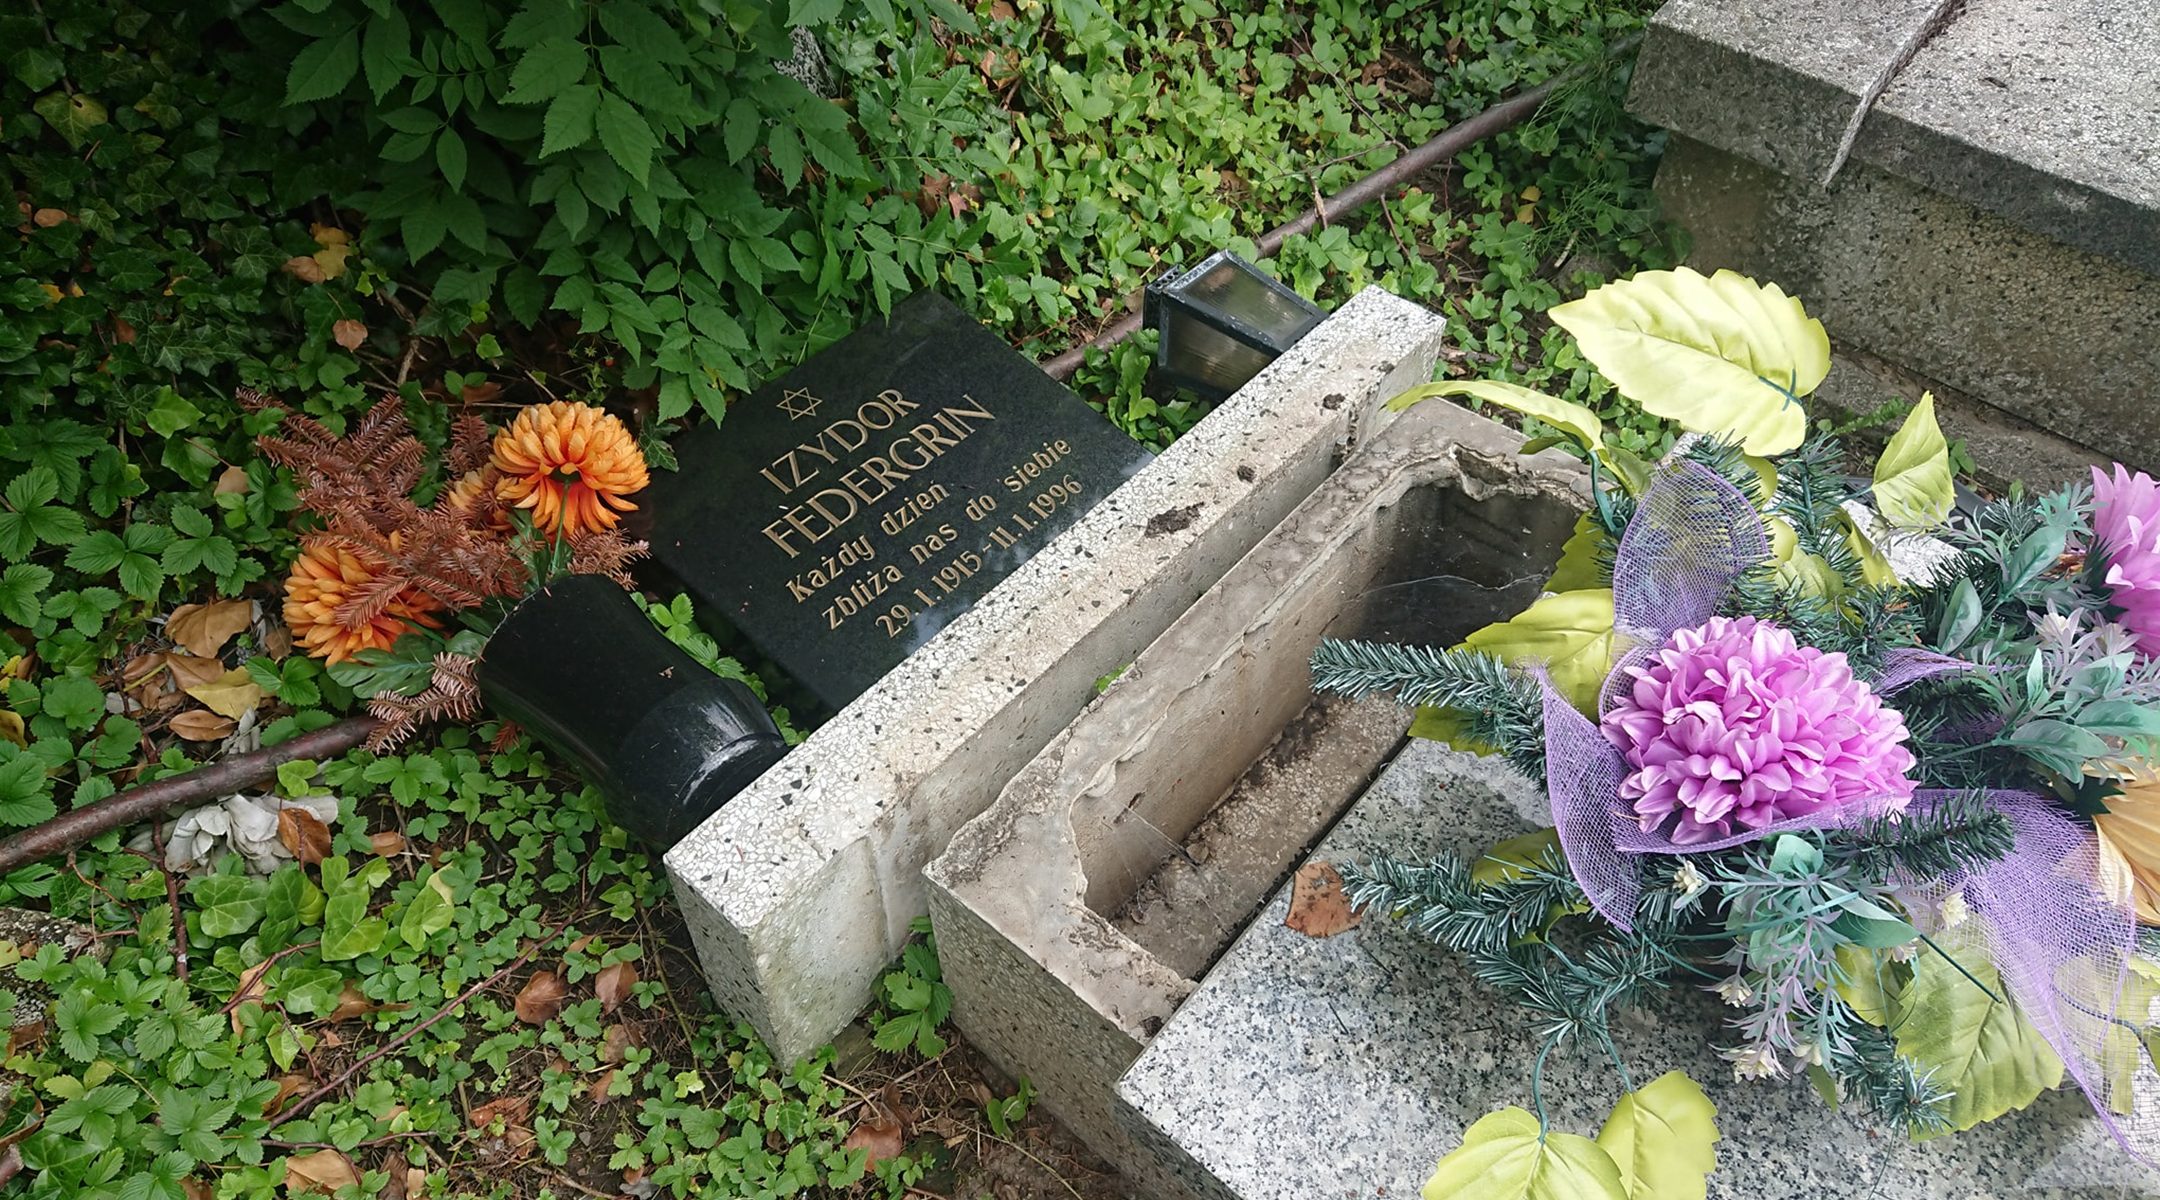 The aftermath of vandalism at the Jewish cemetery of Bielsko-Biała, Poland on June. 26, 2021. (The Jewish Community of Bielsko-Biała)